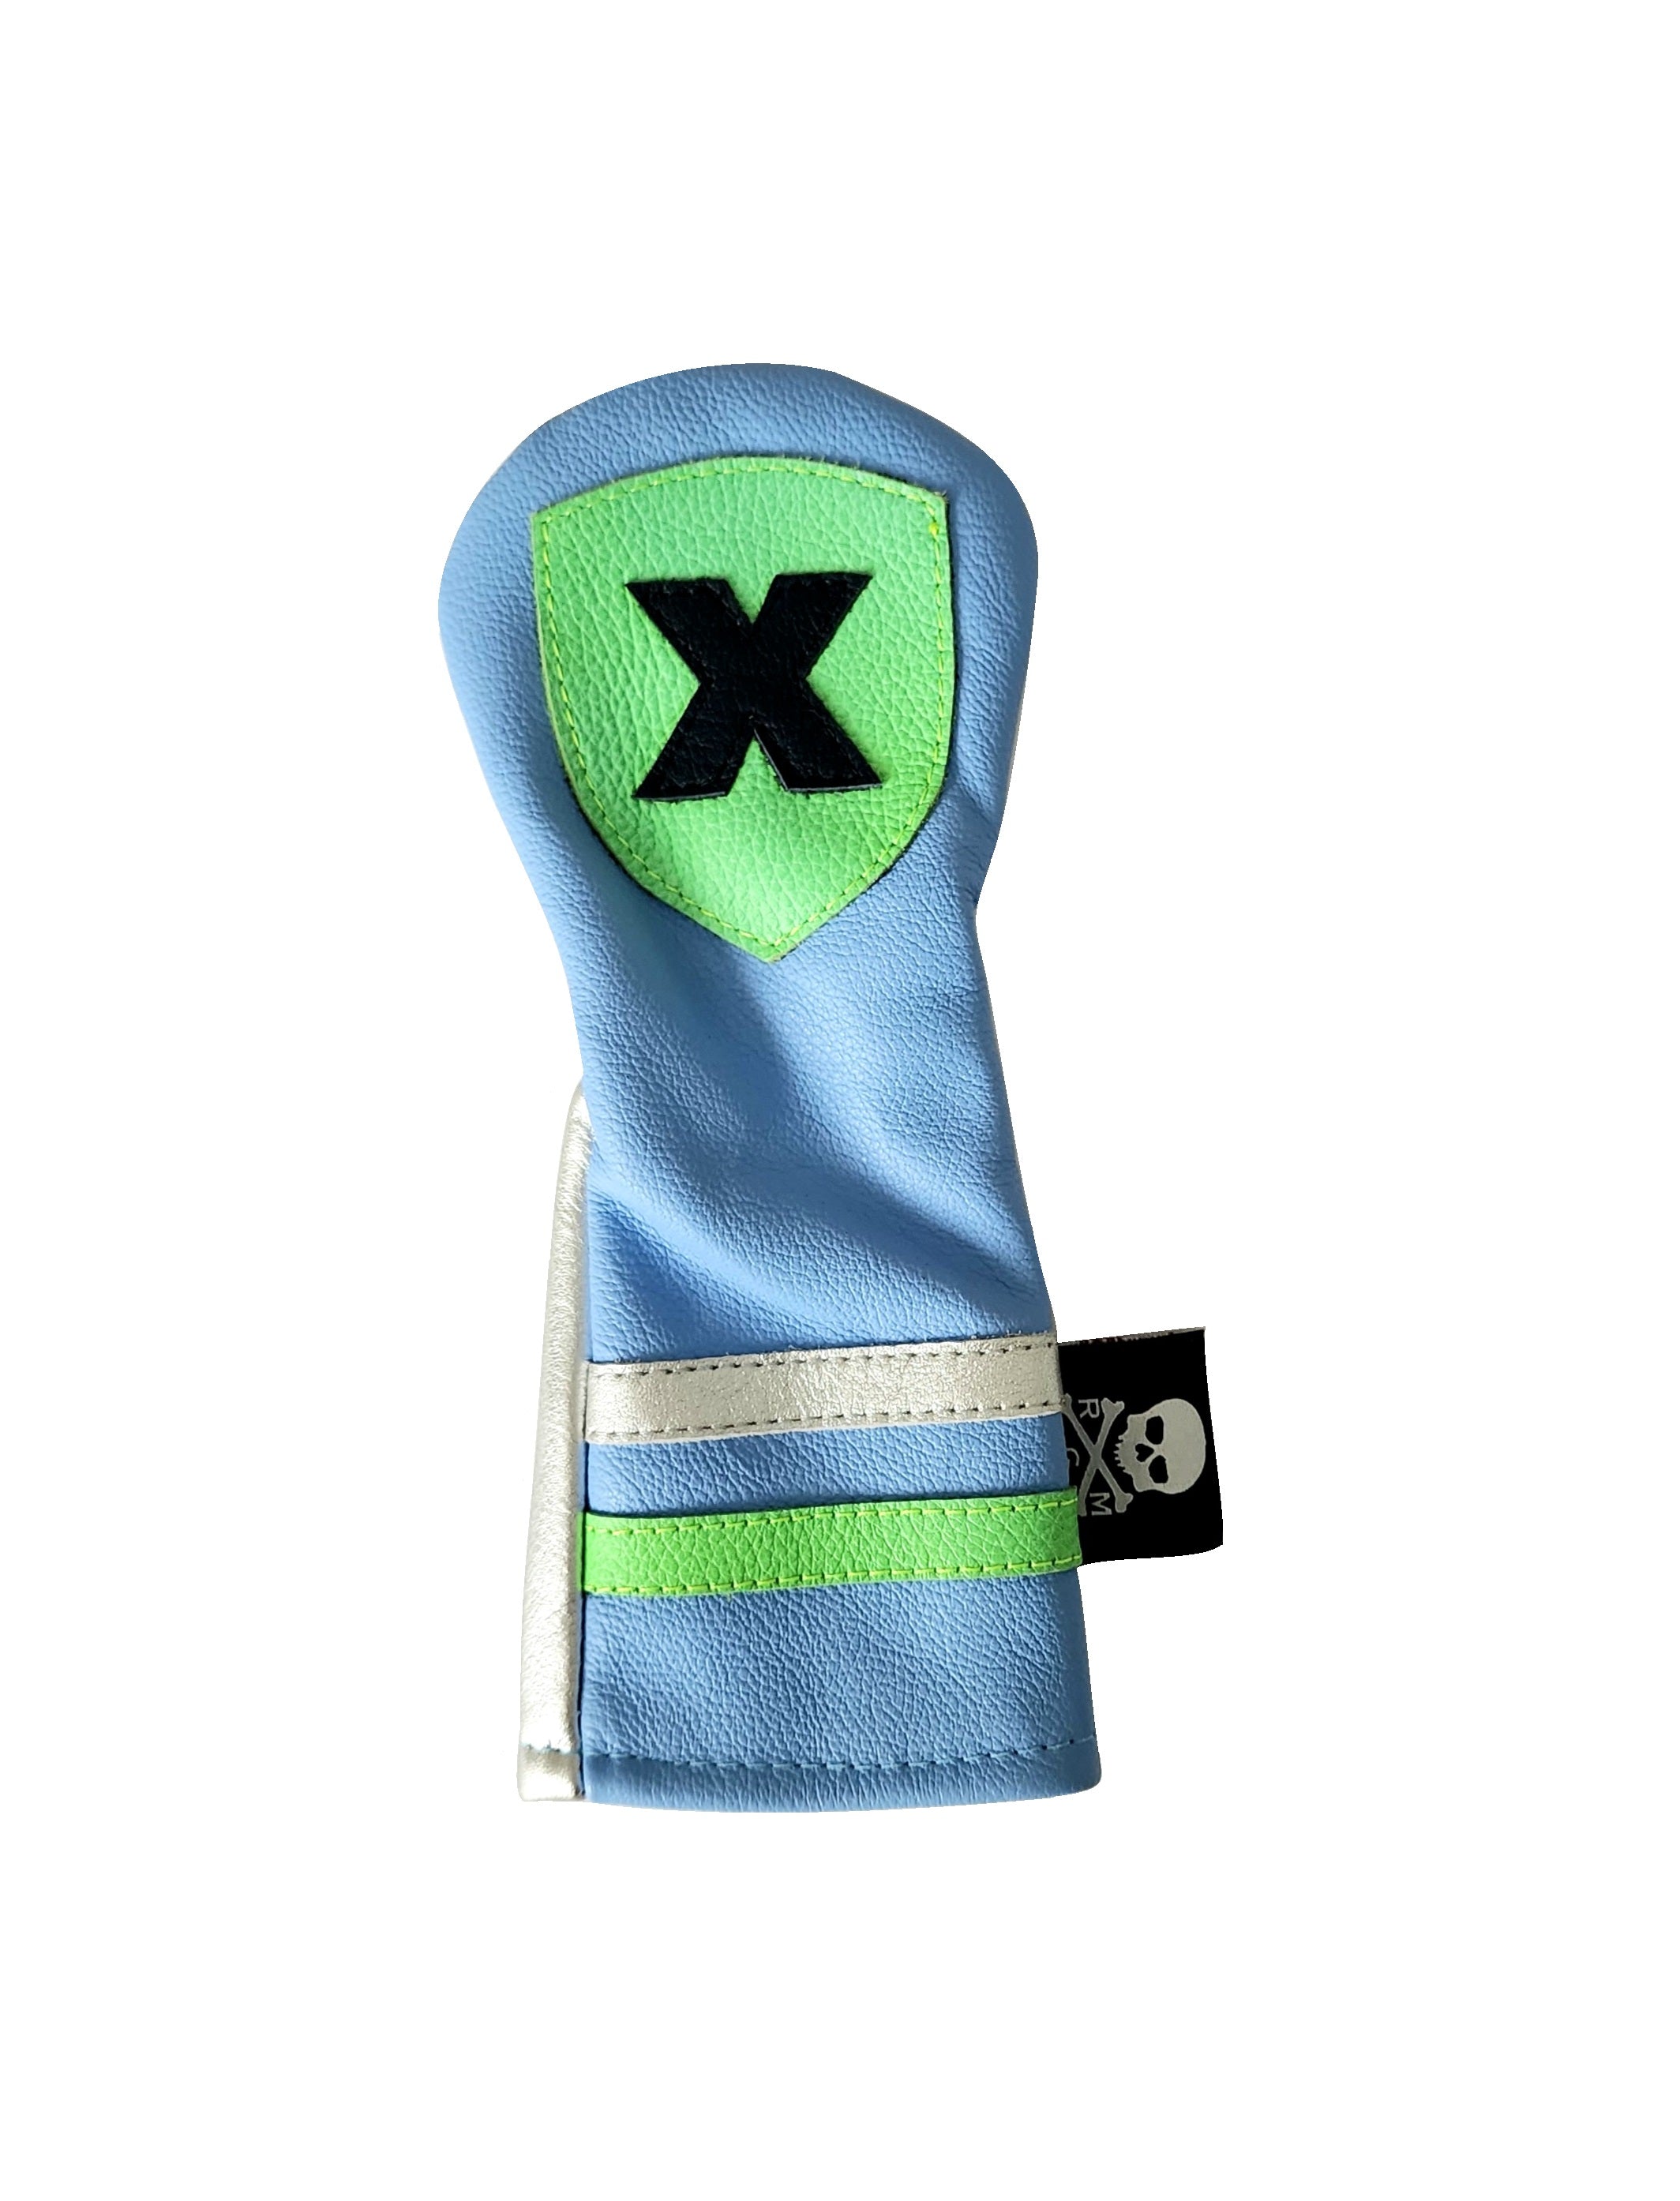 One-Of-A-Kind! Neon Green X Shield Hybrid Headcover - Robert Mark Golf